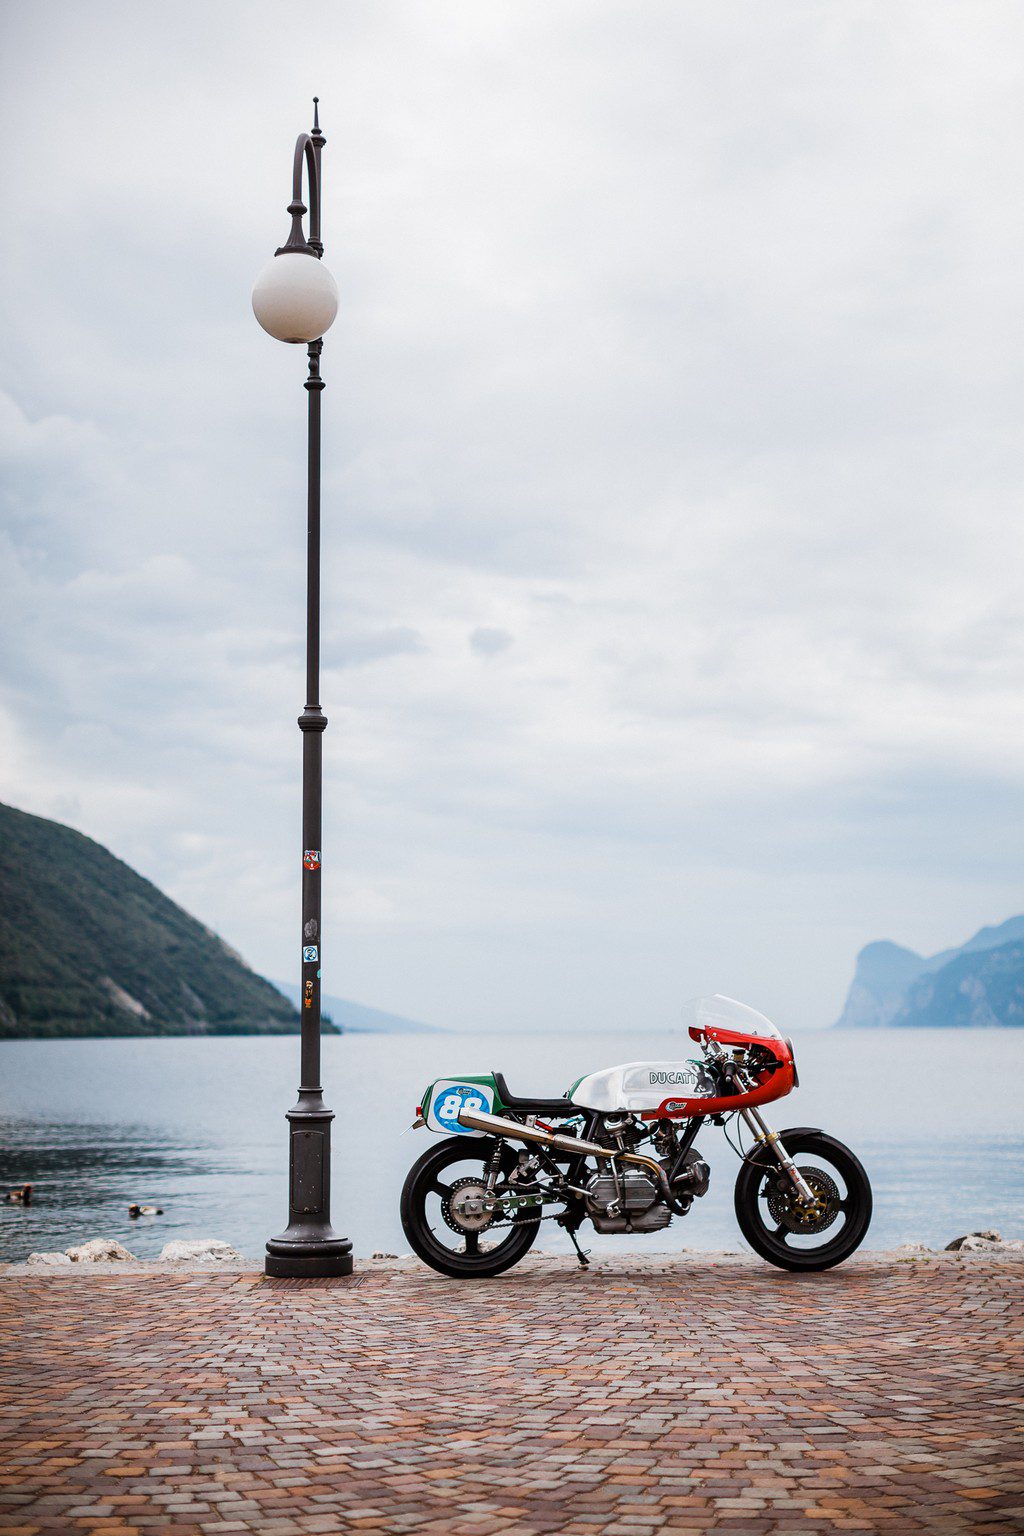  Ducati Road Racer motorcycle parked beside an Italian Lake